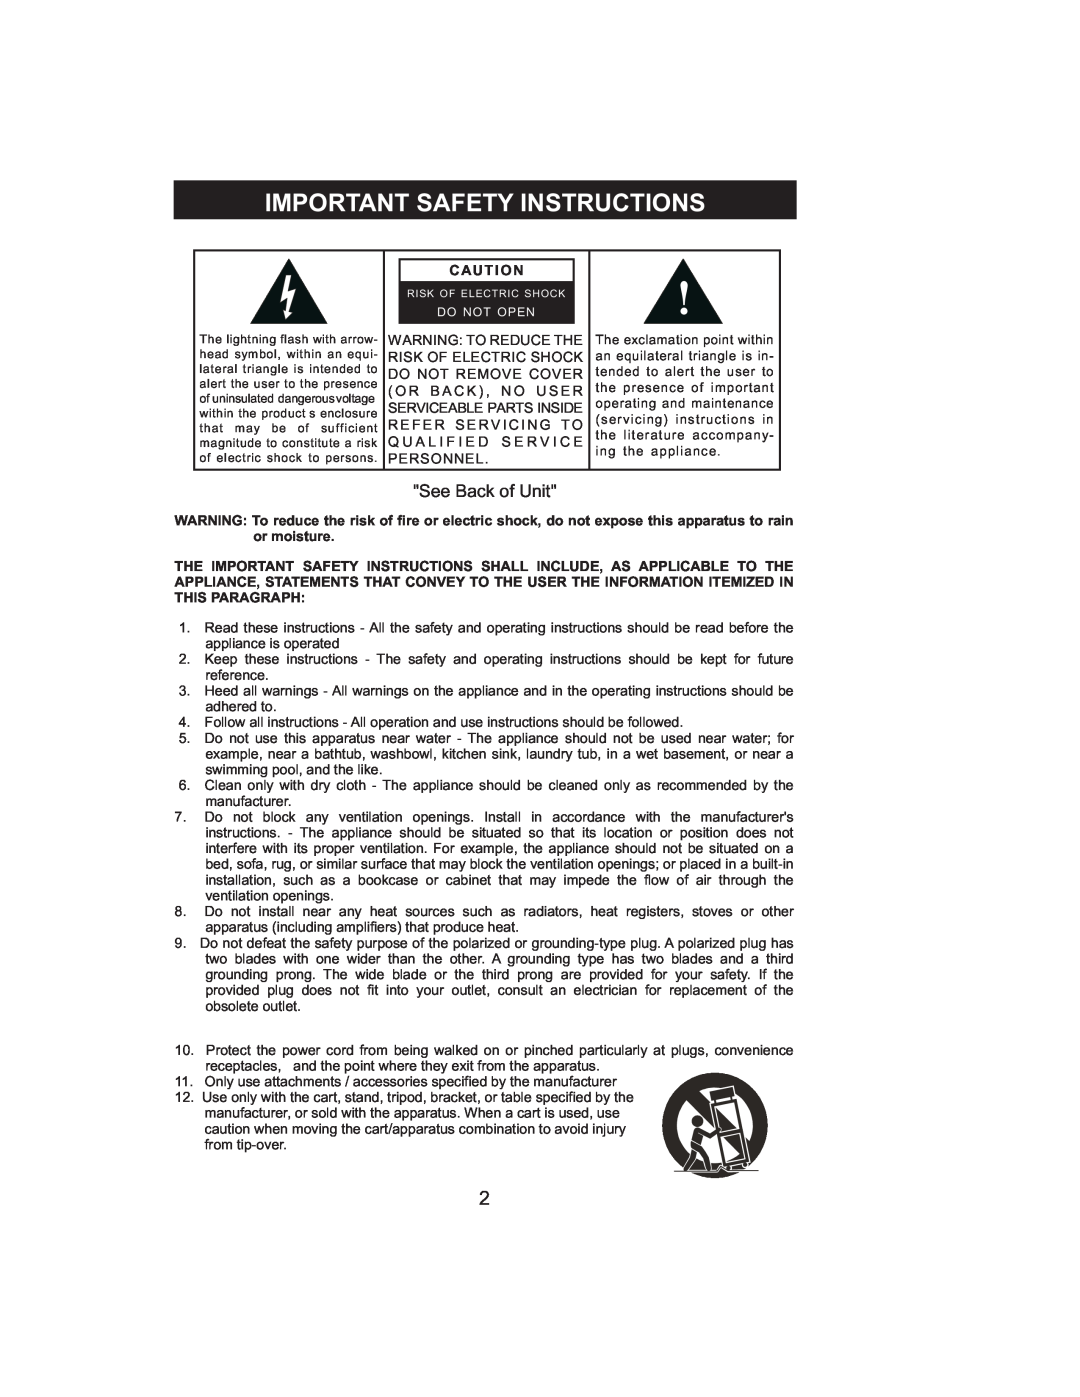 Jensen JMC-1000 manual Importantsafety Instructions, SeeBackofUnit 